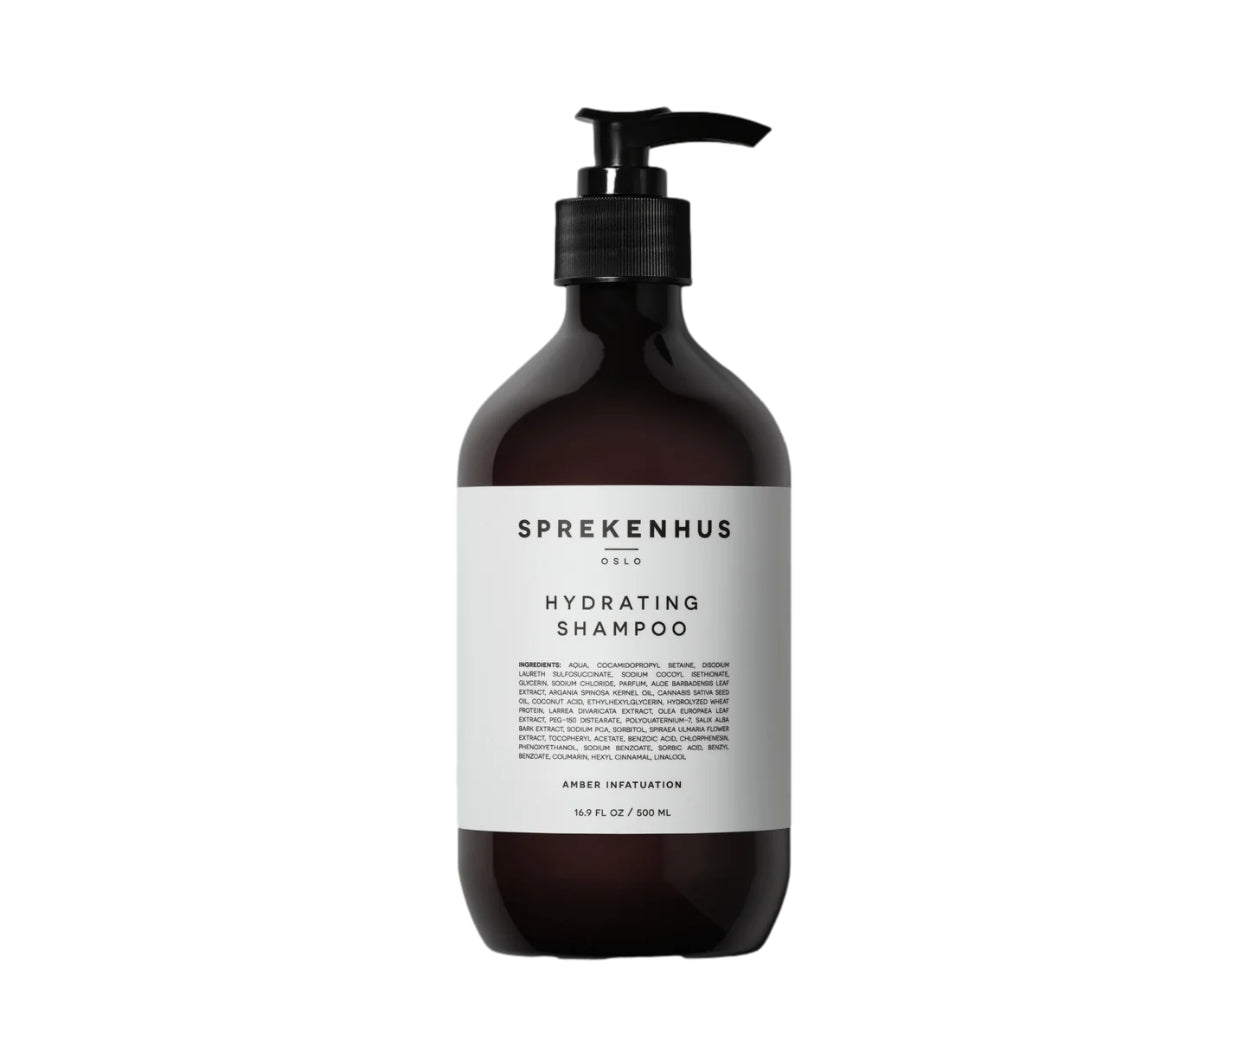 Sprekenhus Hydrating Shampoo 500ml - Amber Infatuation Shampoo - [shop.name]